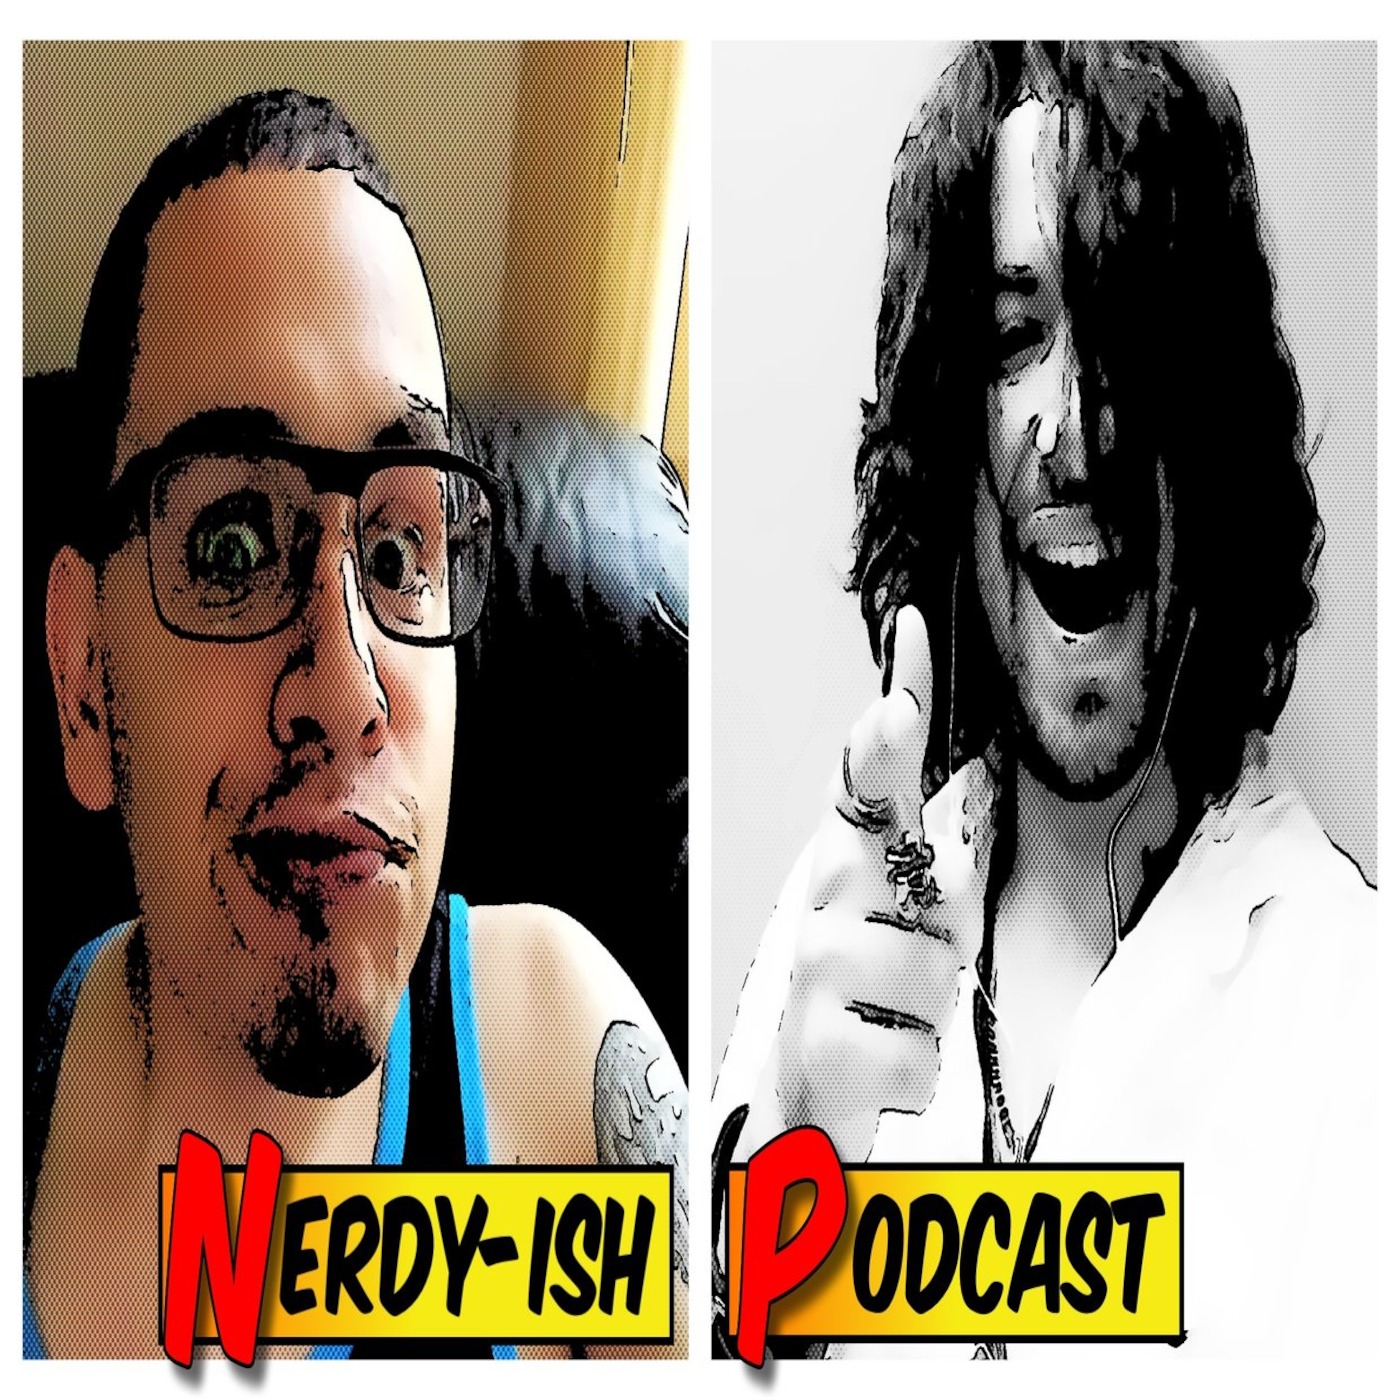 Nerdy-Ish Podcast